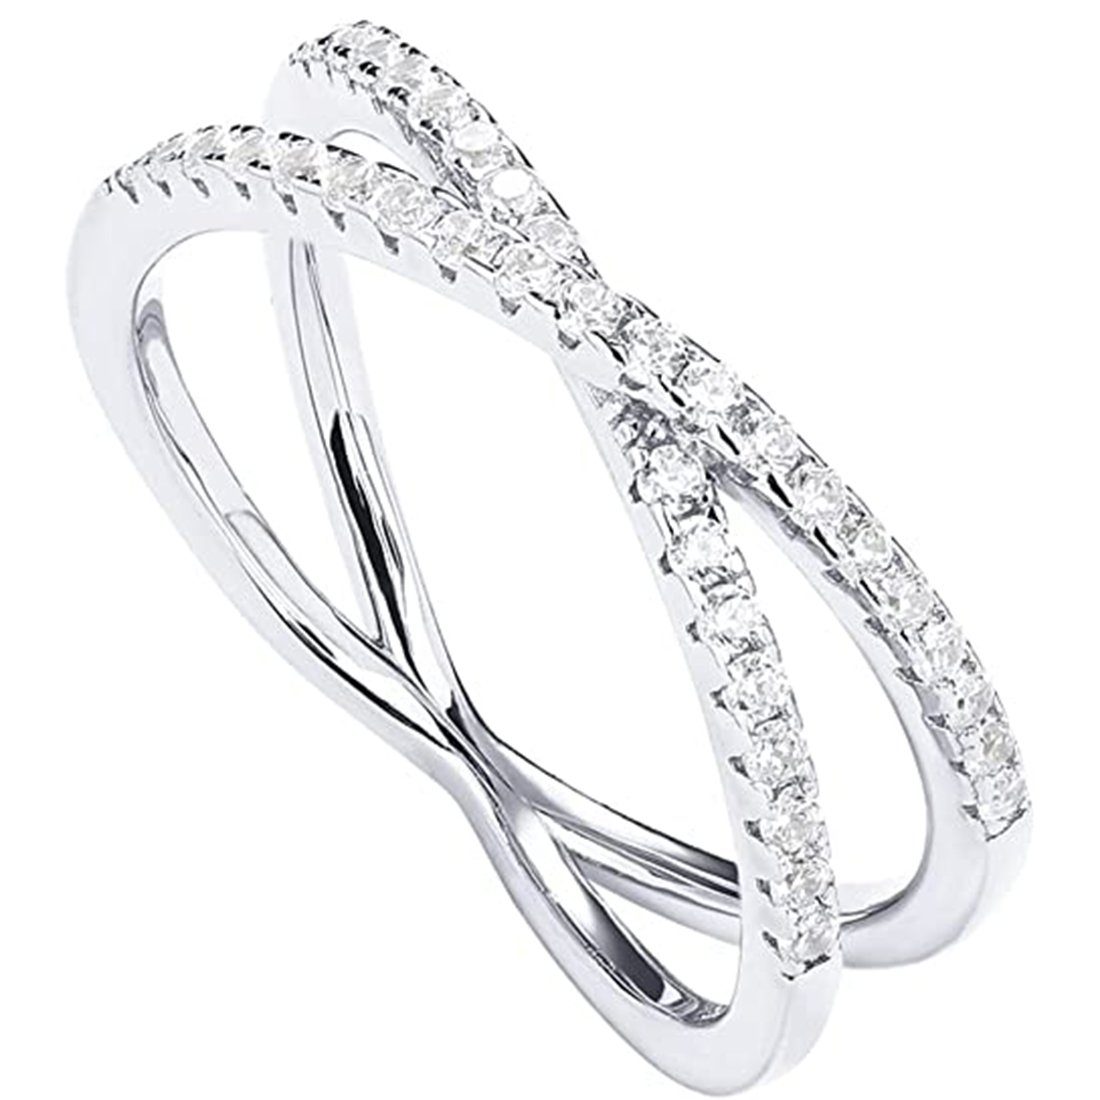 Haiaveng Fingerring Gold Plated X Ring Simulated Diamond, Criss Cross Ring for Women